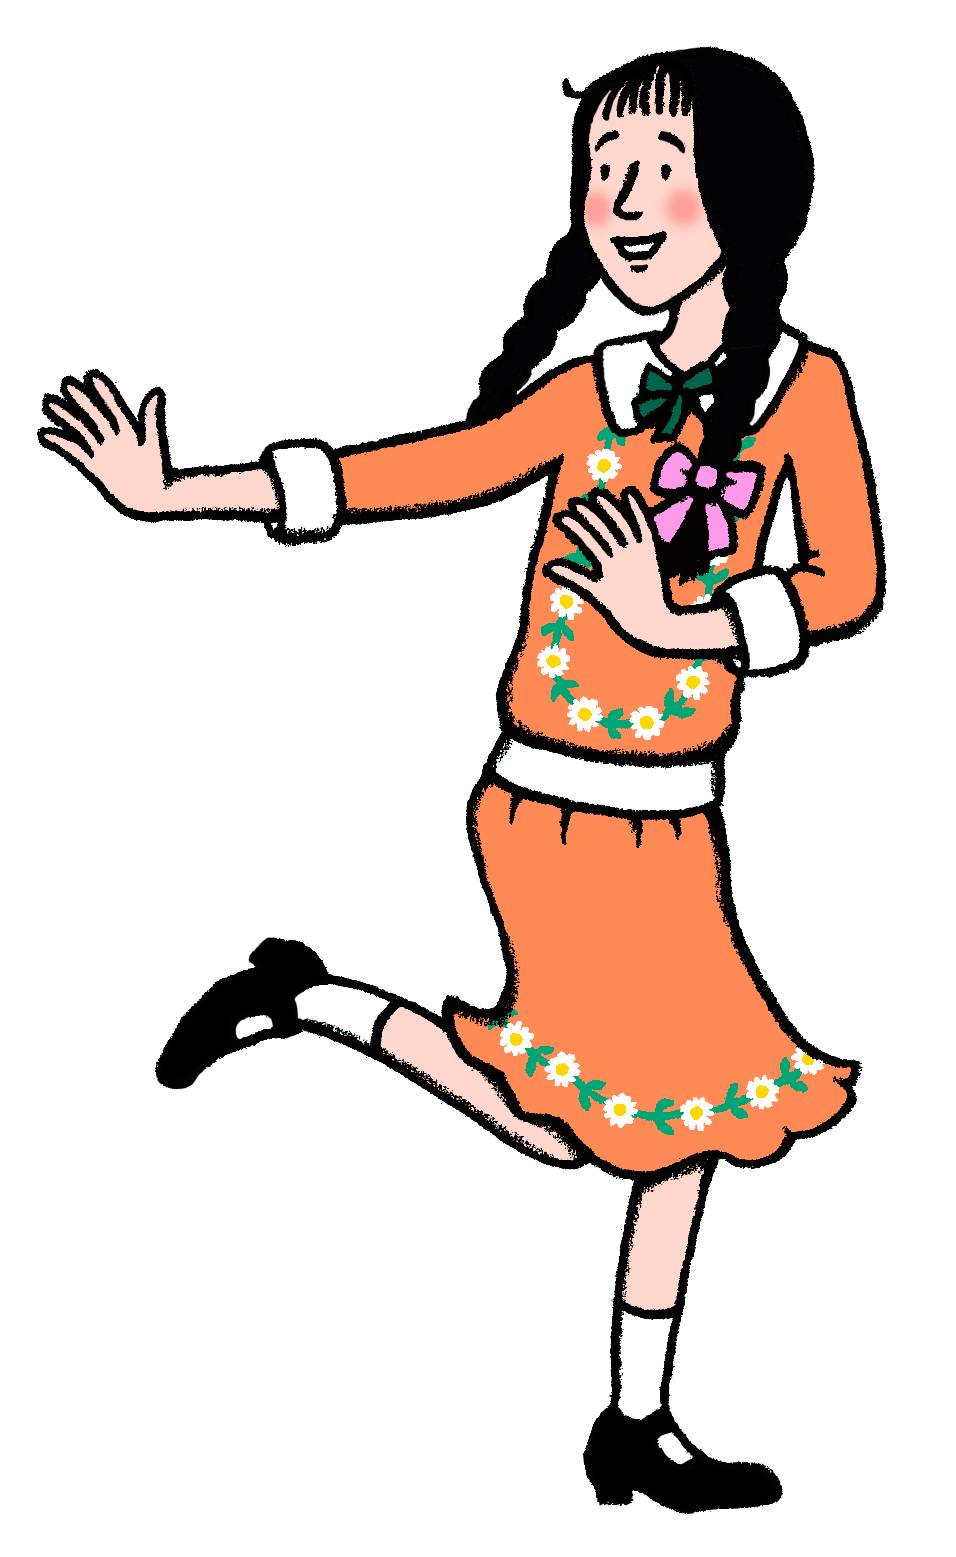 mona dancing the charleston